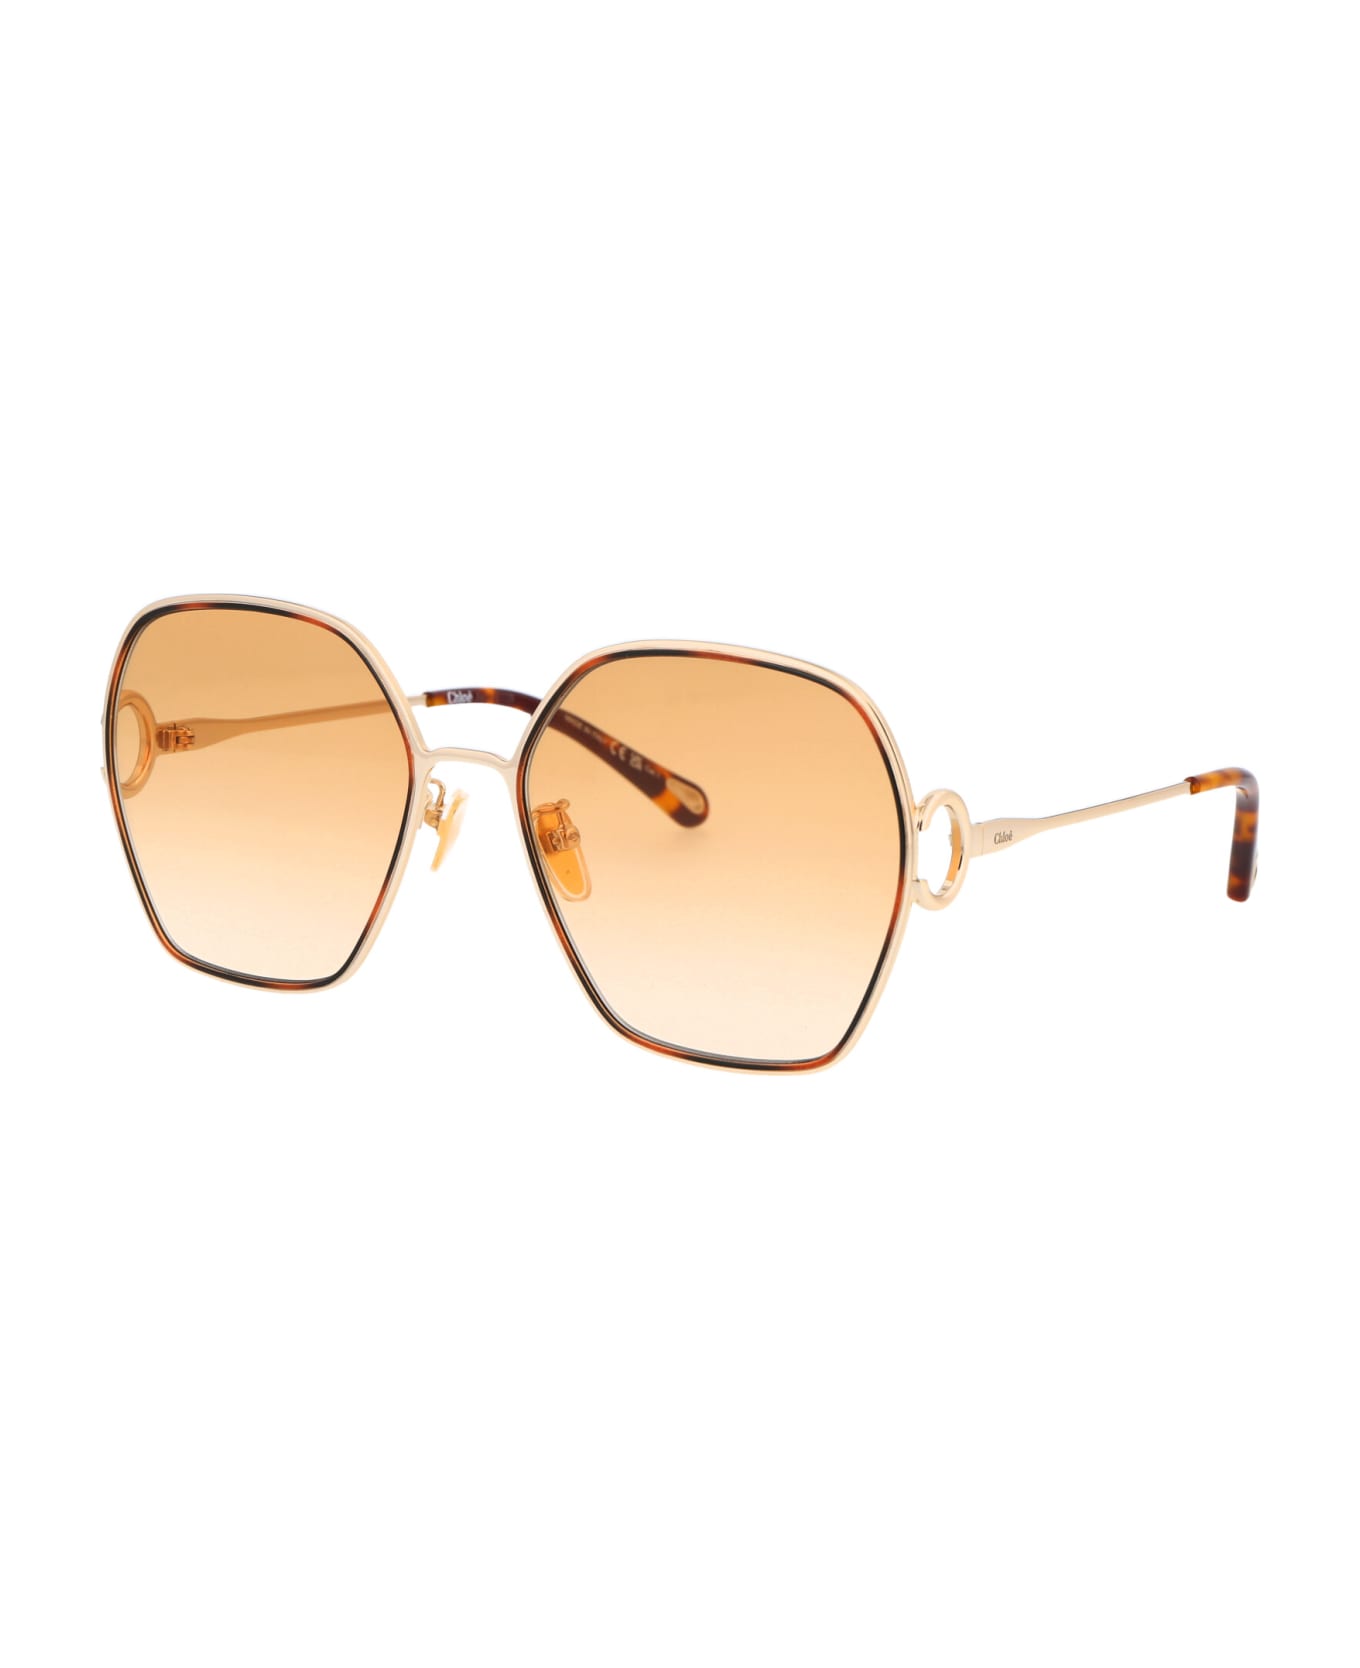 Chloé Eyewear Ch0146s Sunglasses - 006 GOLD GOLD ORANGE